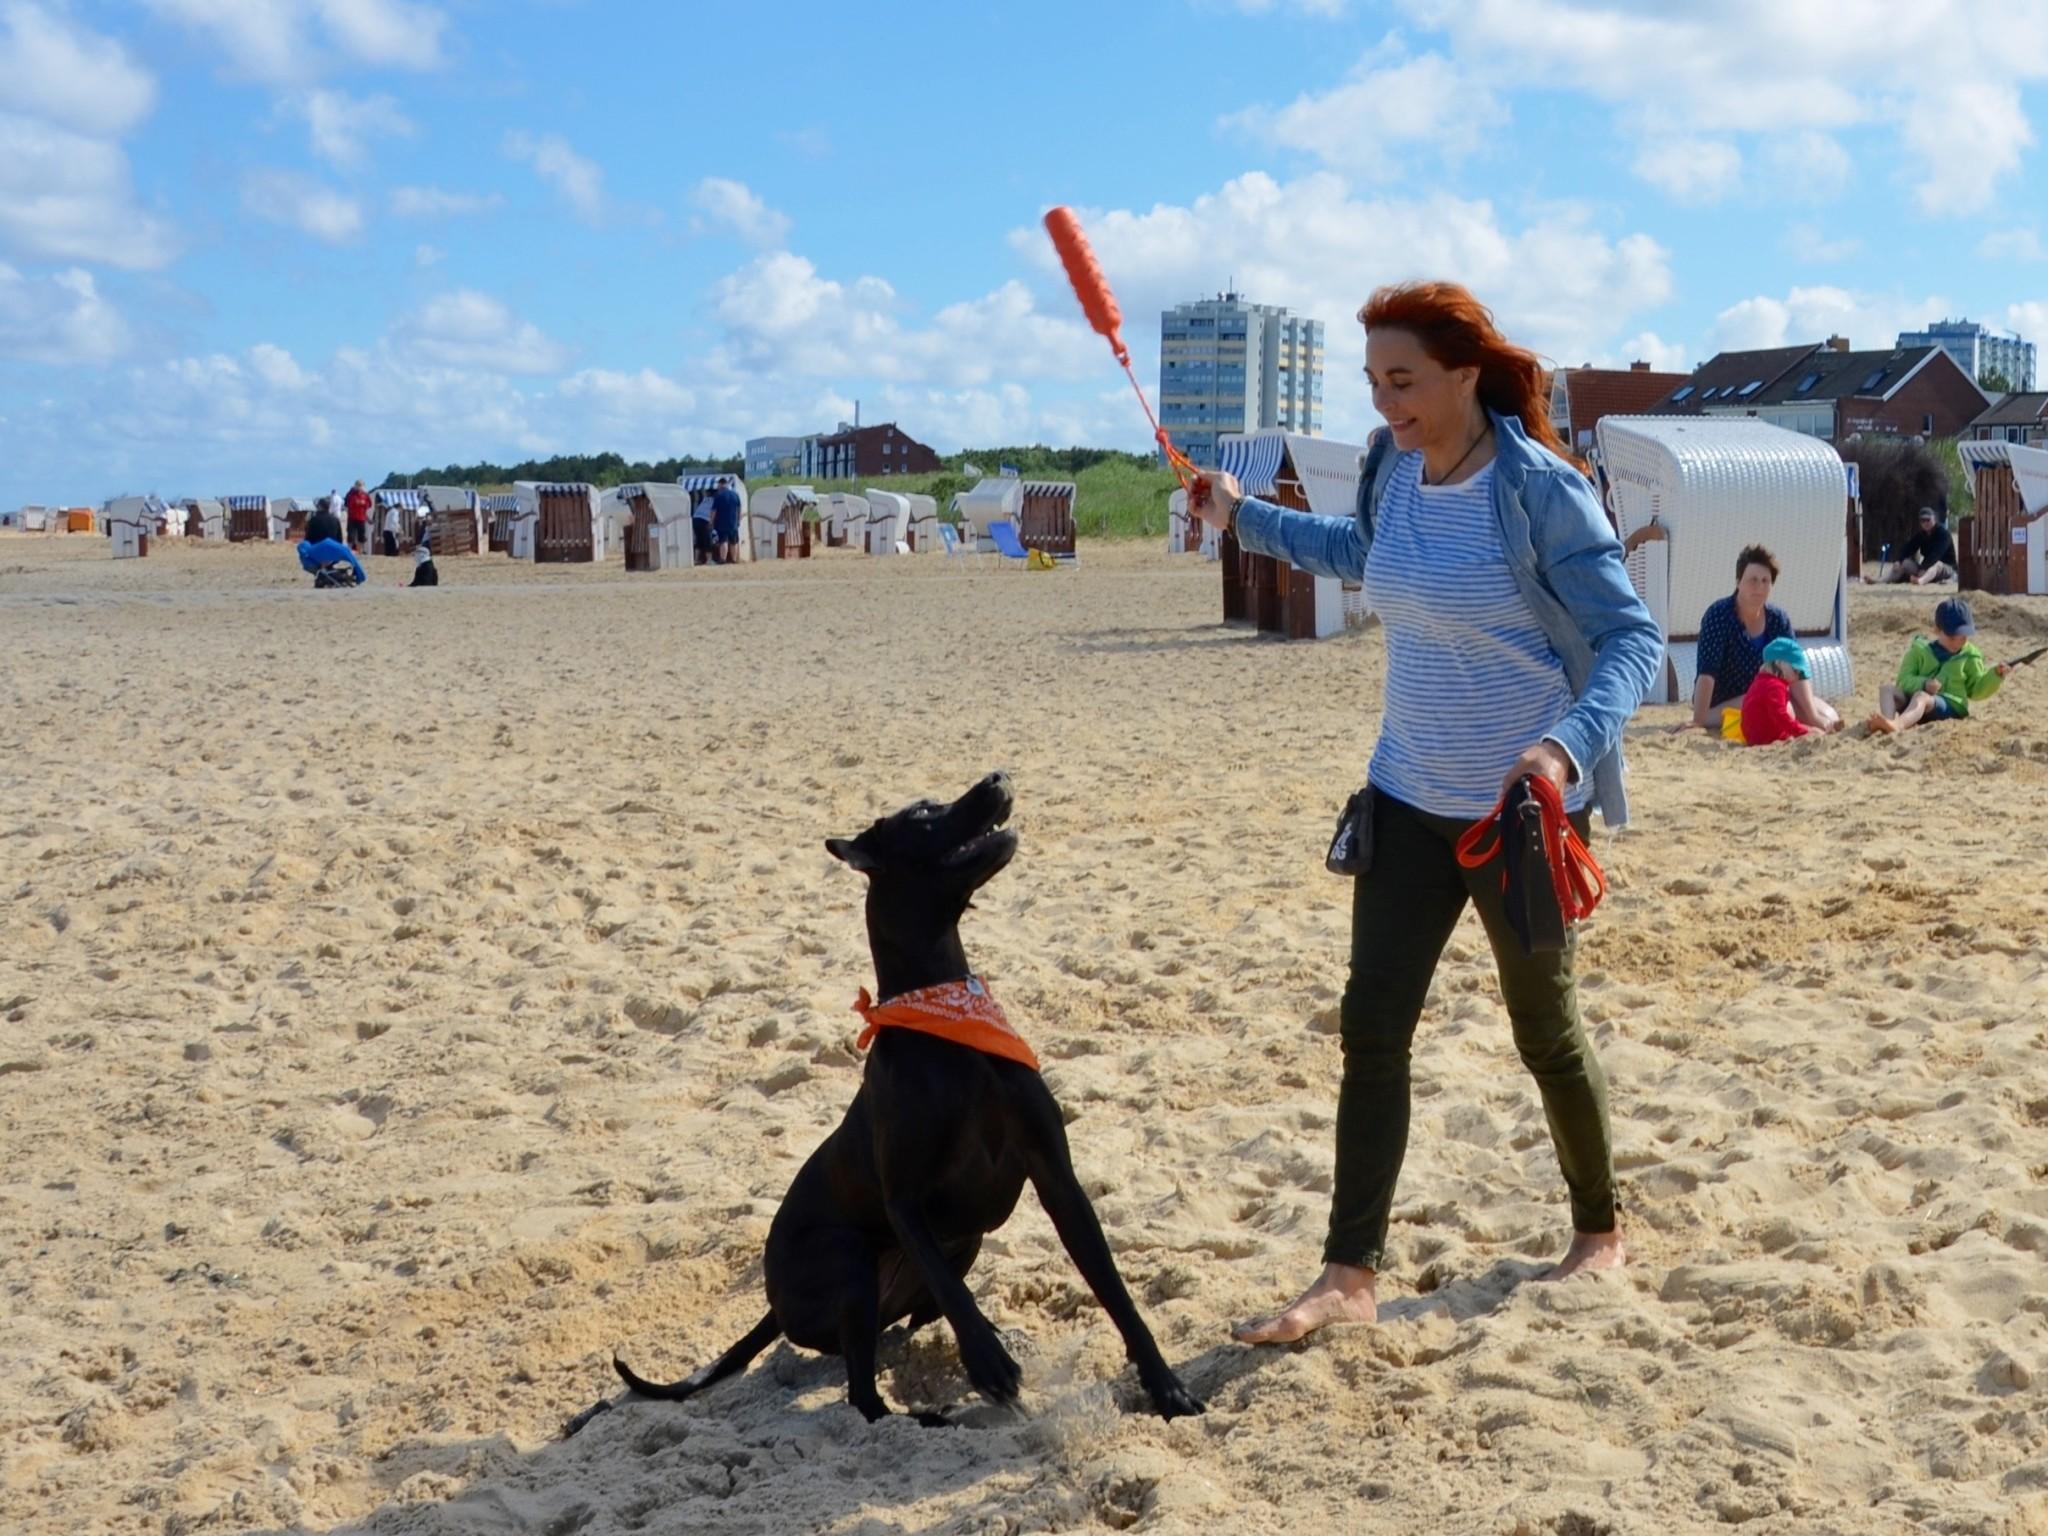 hundkatzemaus Galerie Hunde am Strand.Viele Hunde lieben es, am Strand